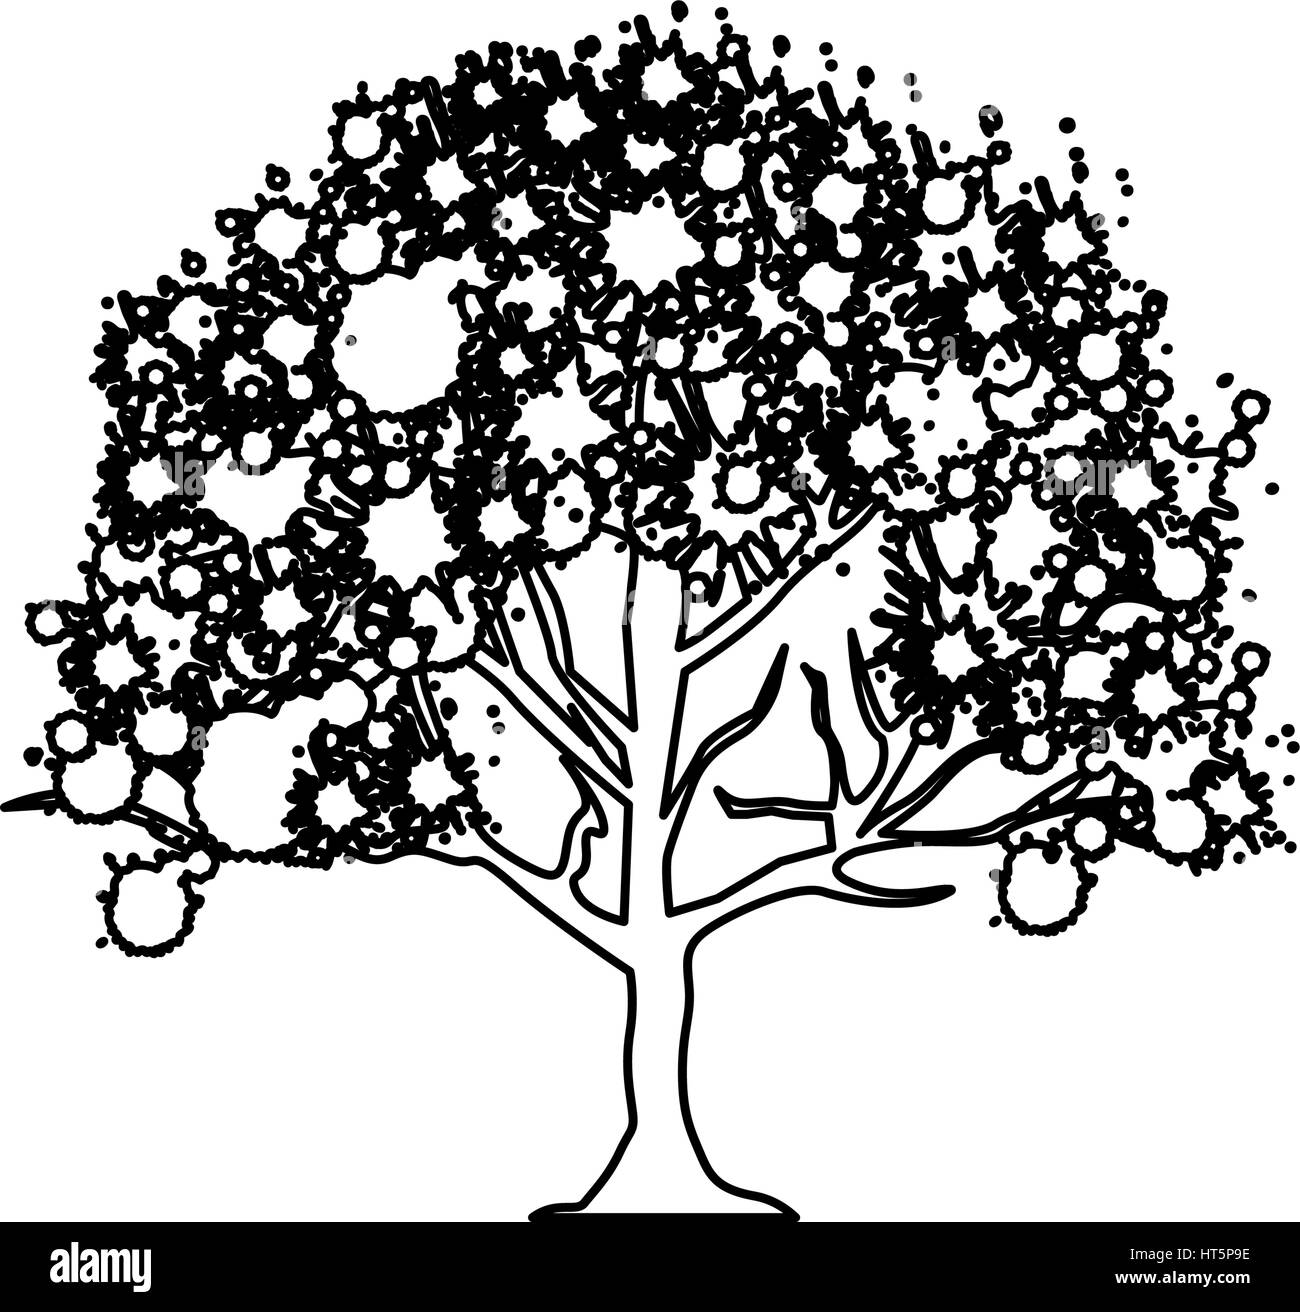 Abbildung Bäume mit einige Blätter-Symbol Stock Vektor